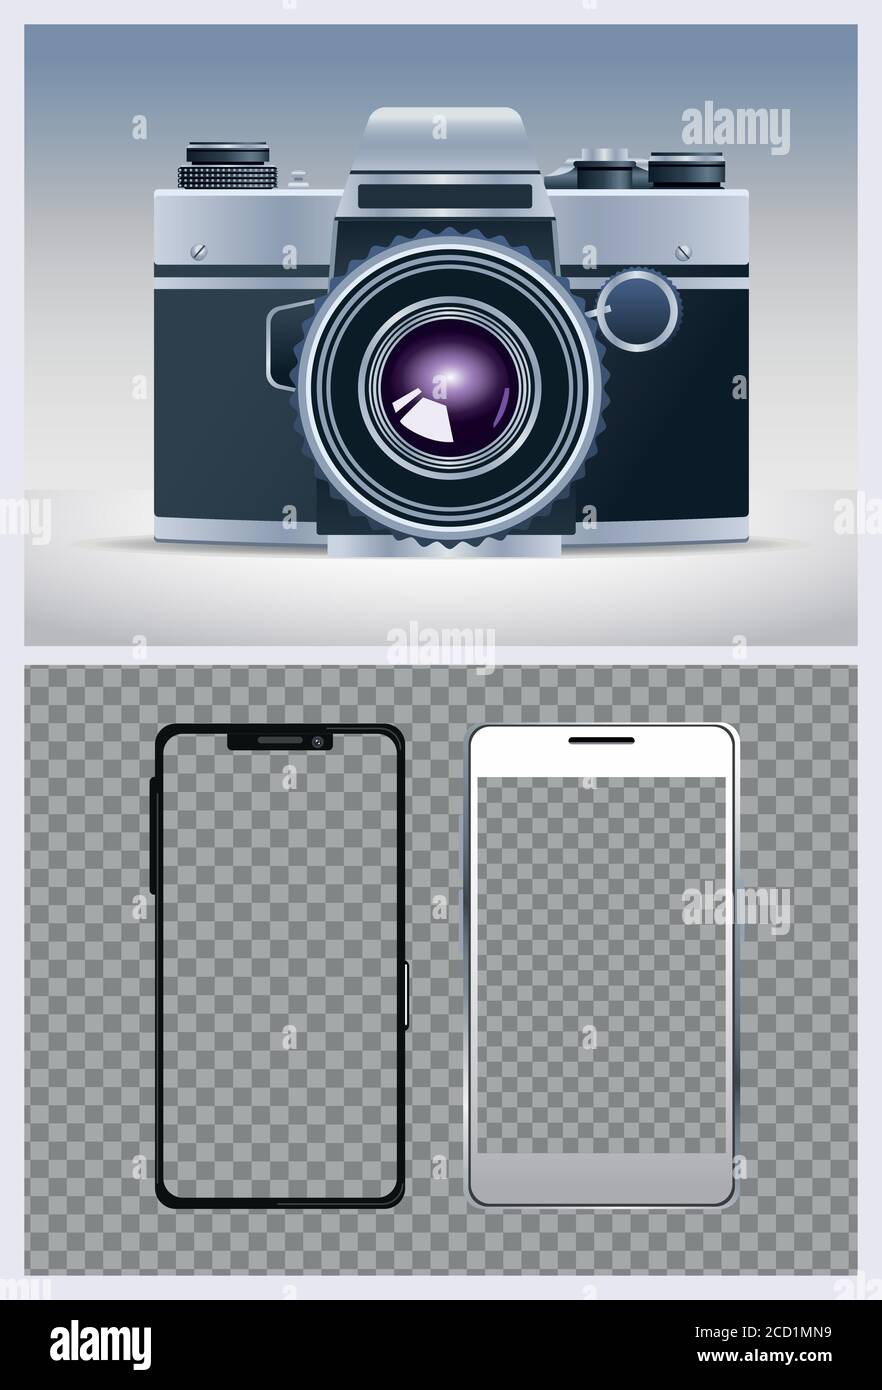 camera digital technology with smartphones vector illustration design Stock Vector